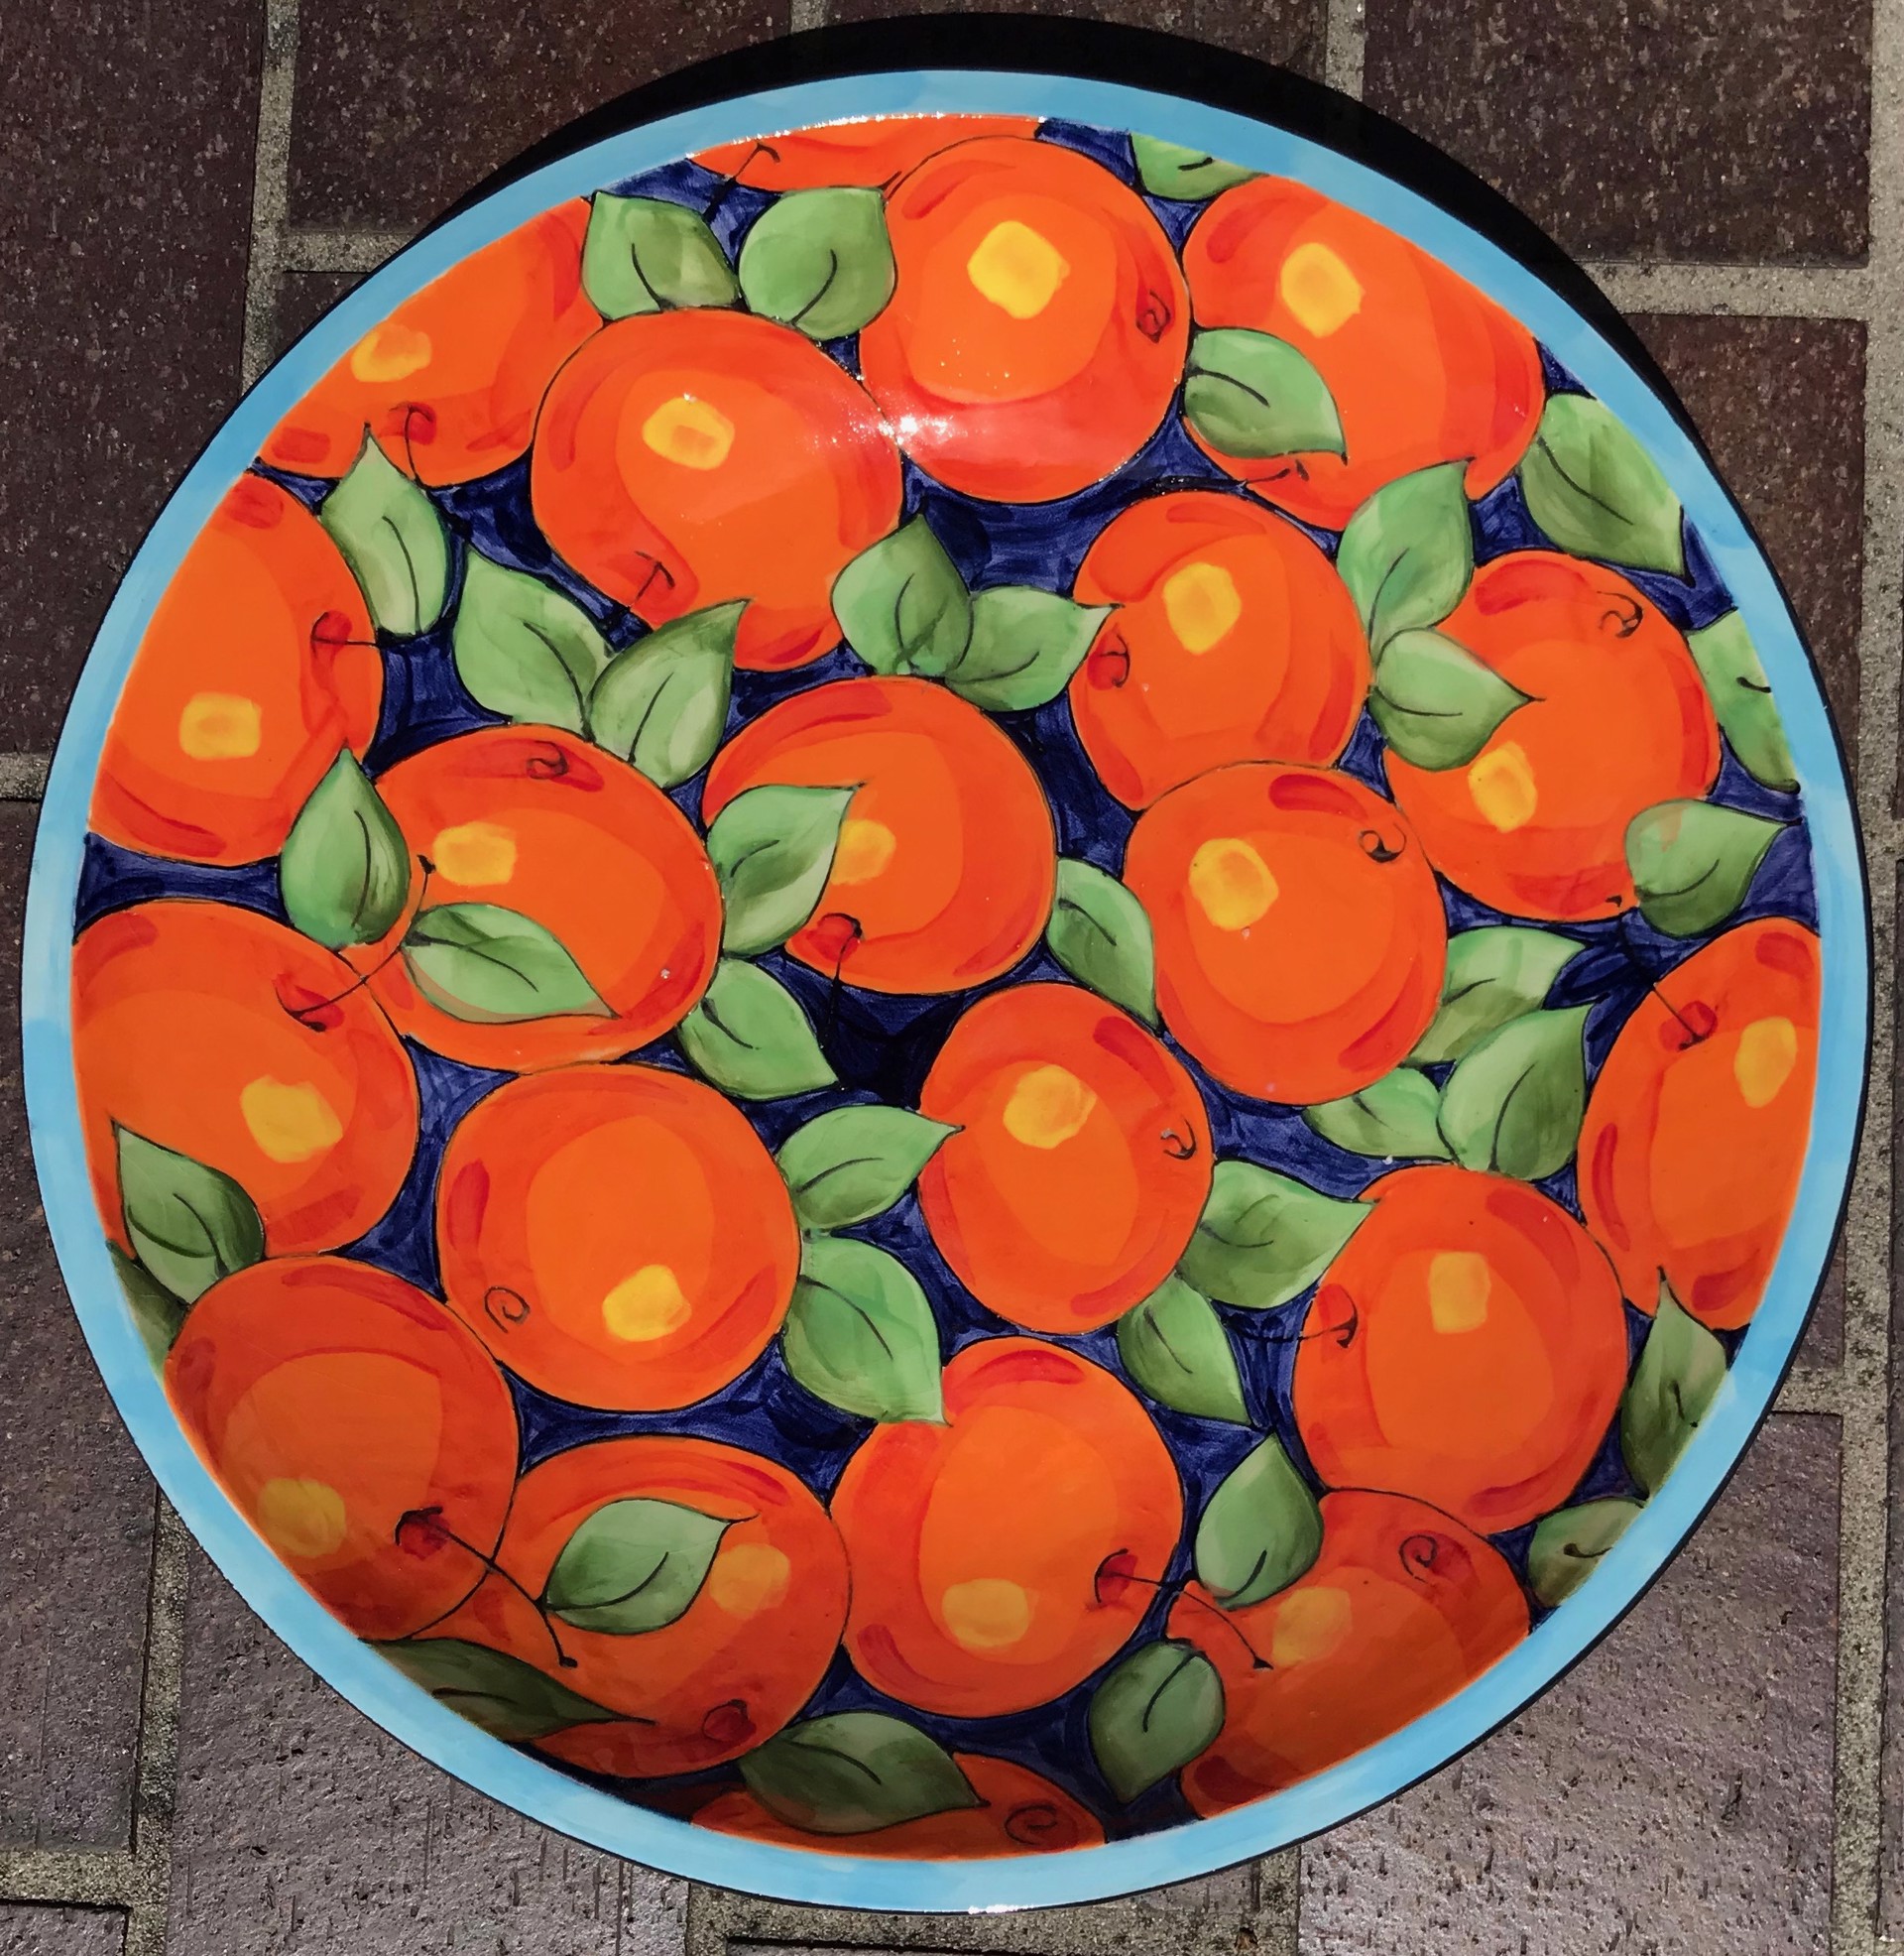 12" Oranges Platter by Denise Ford